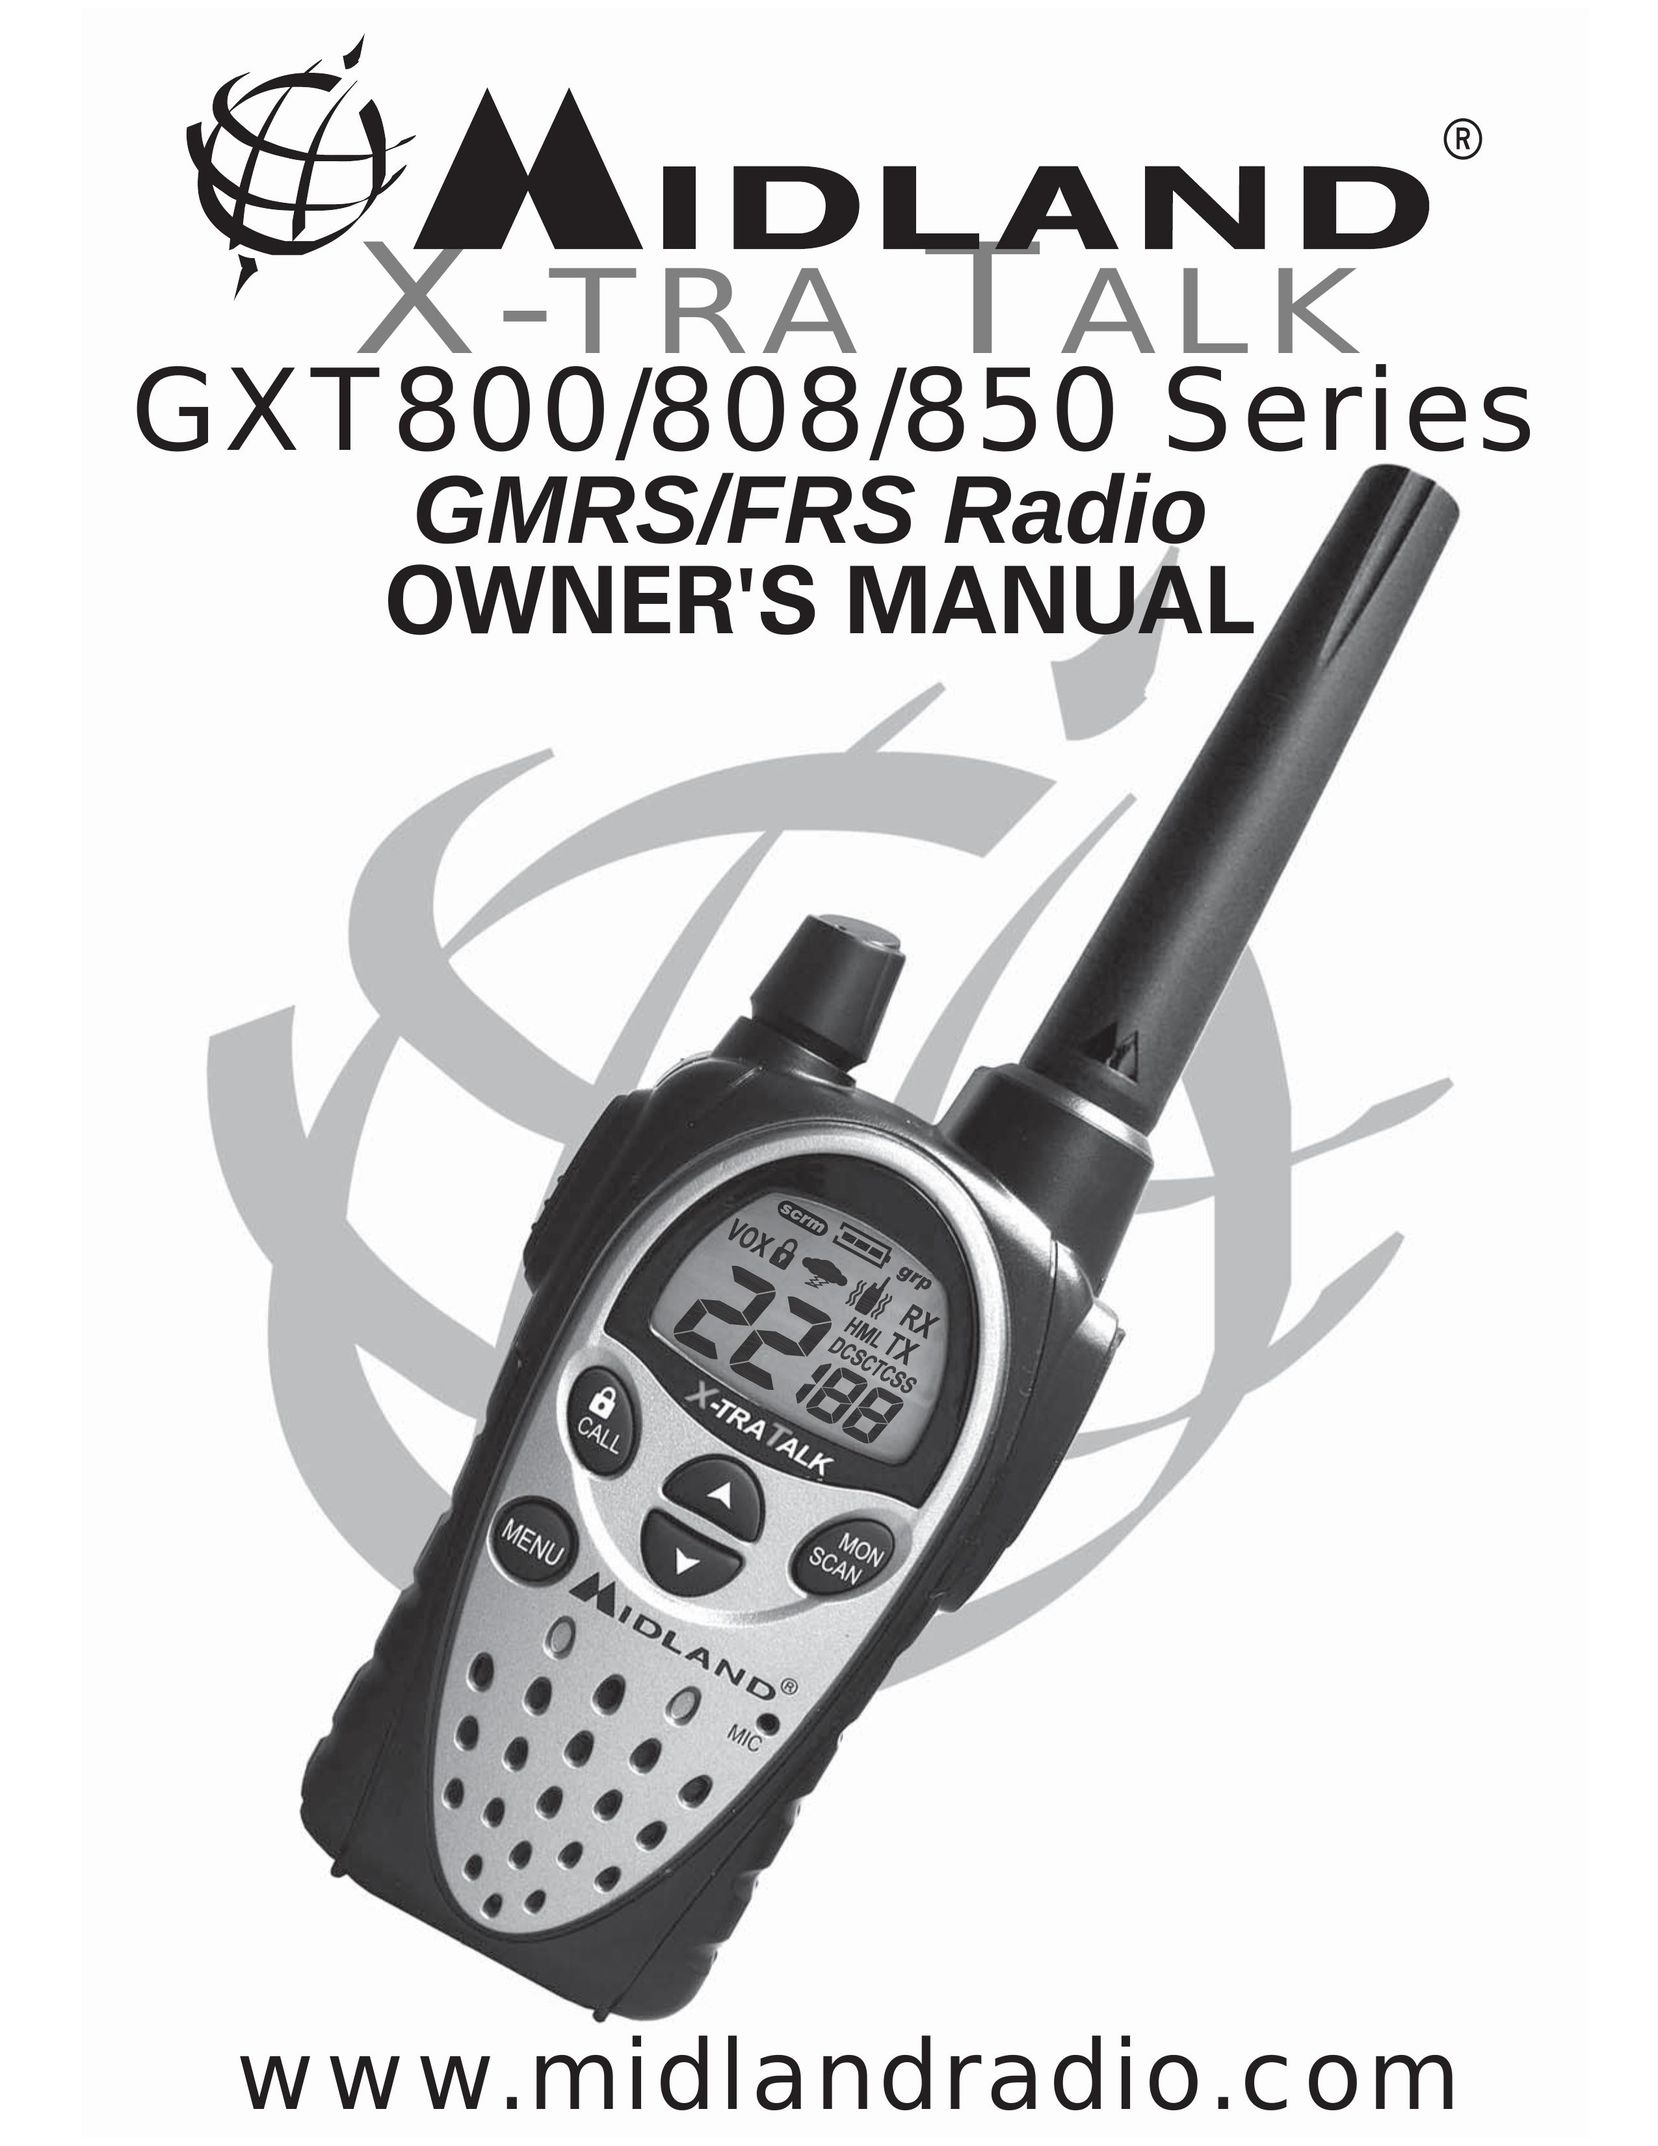 Midland Radio GXT808 Series Two-Way Radio User Manual